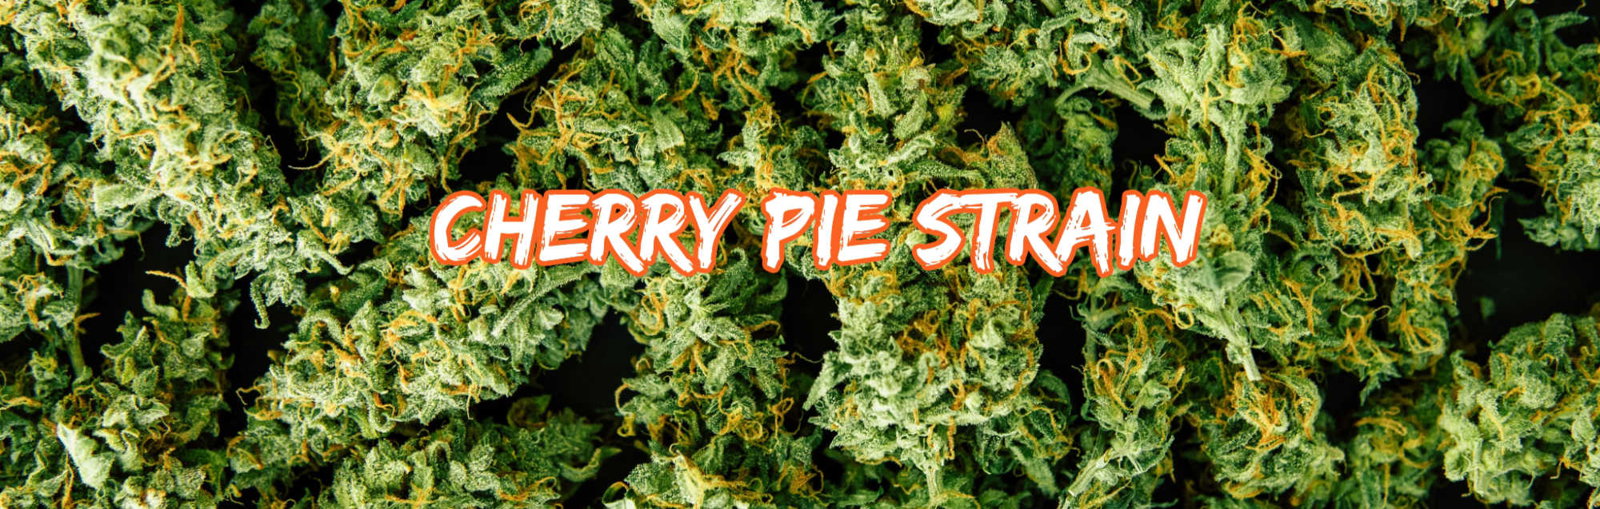 image of cherry pie strain